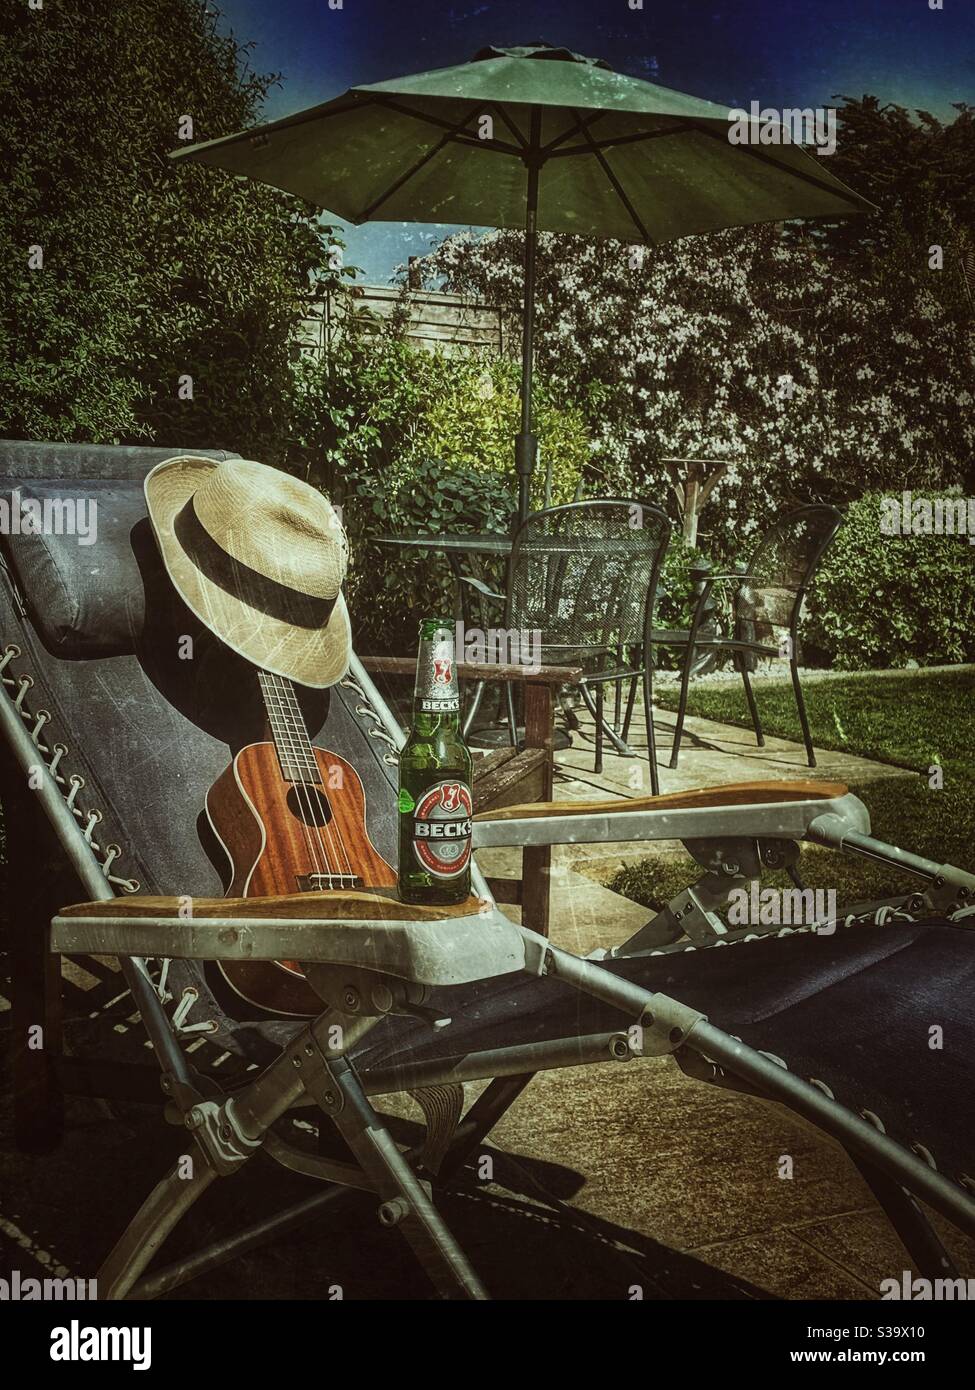 Ukulele straw hat and beer bottle on recliner summertime in the garden Stock Photo